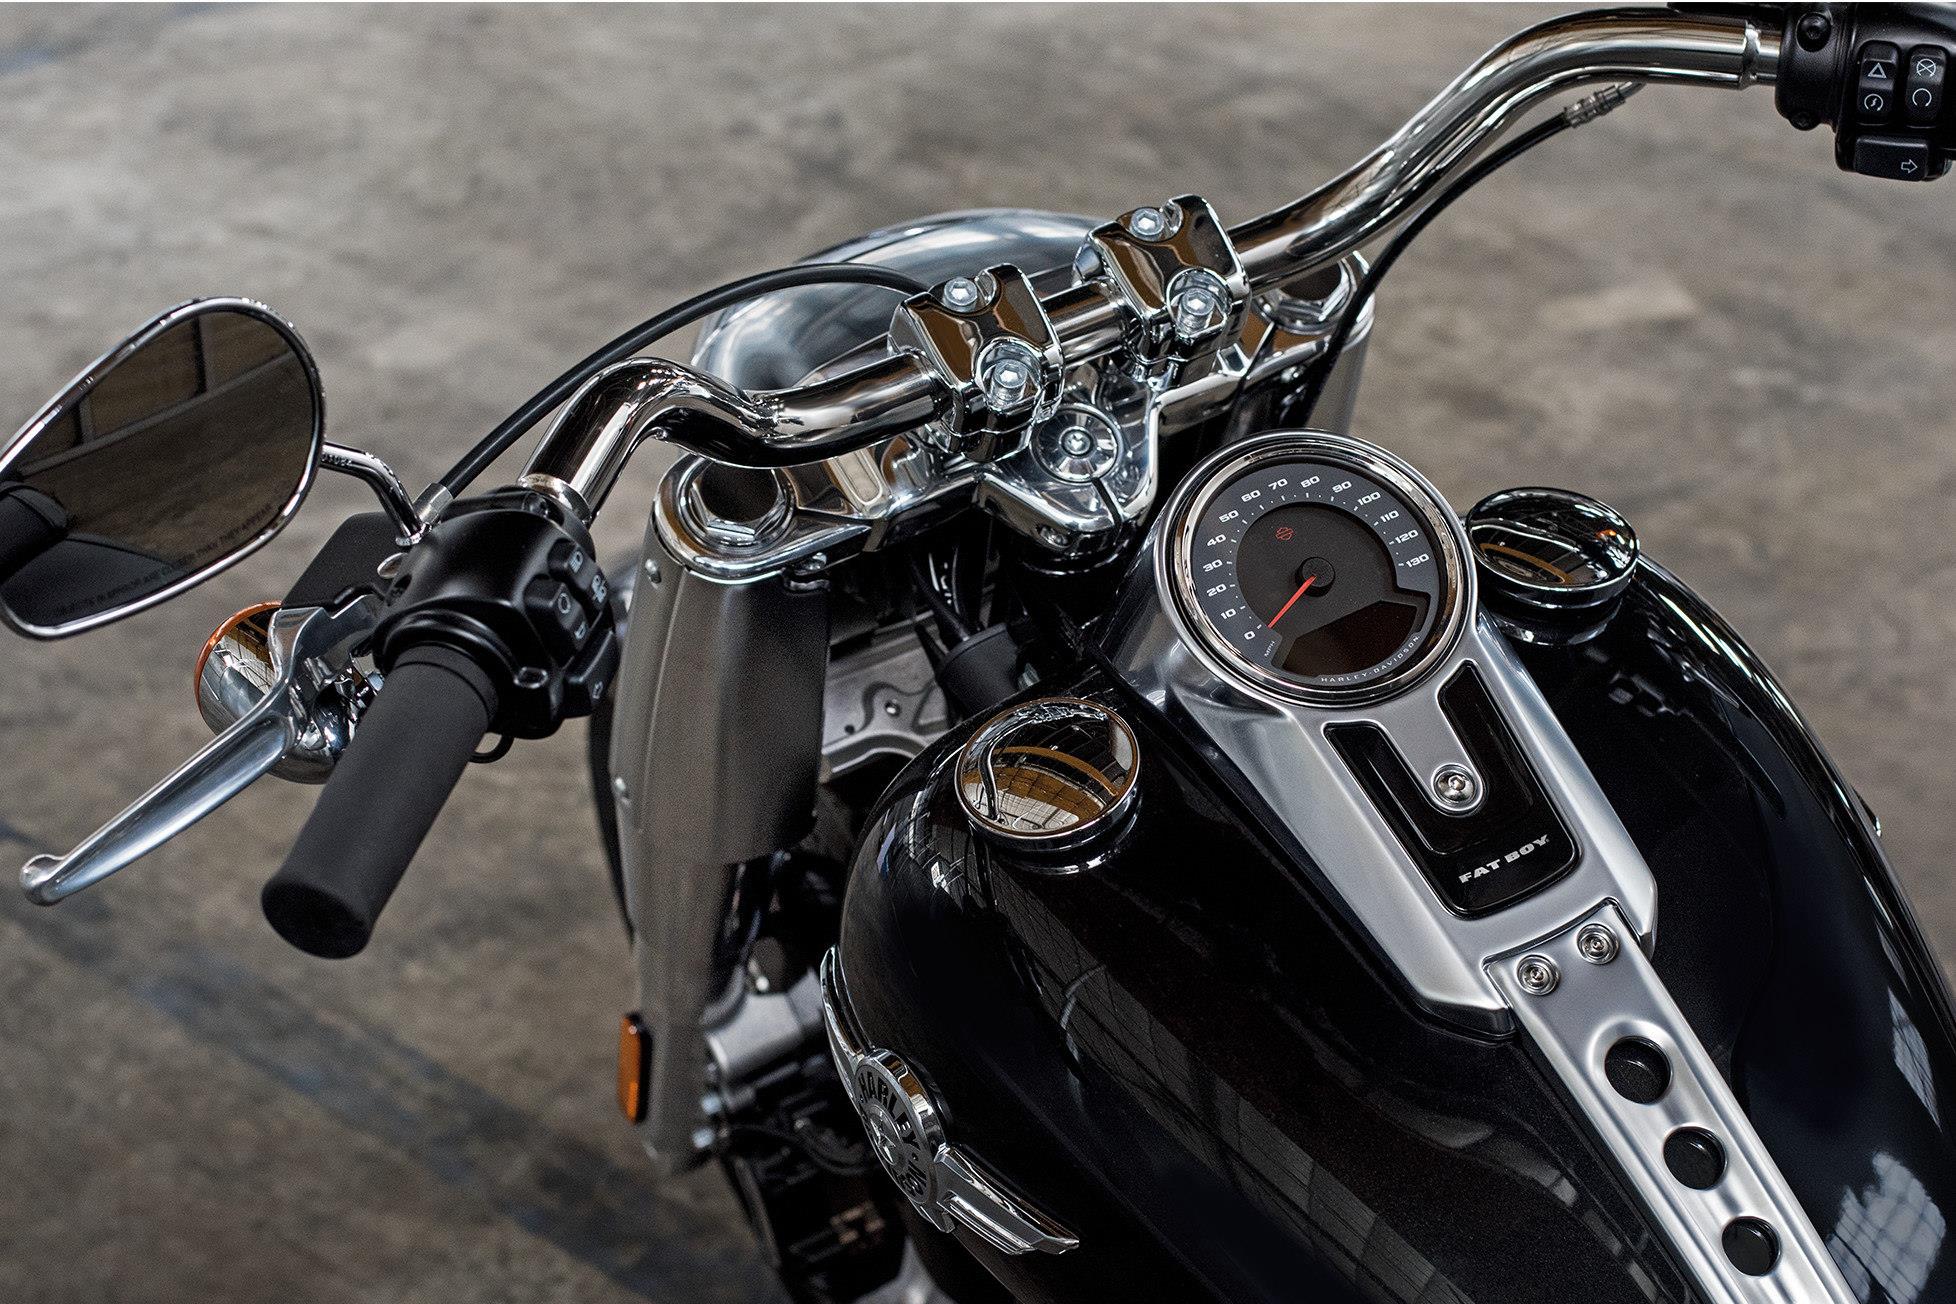 Harley Davidson Fat Boy 2018 Price Specs Images Mileage Colors